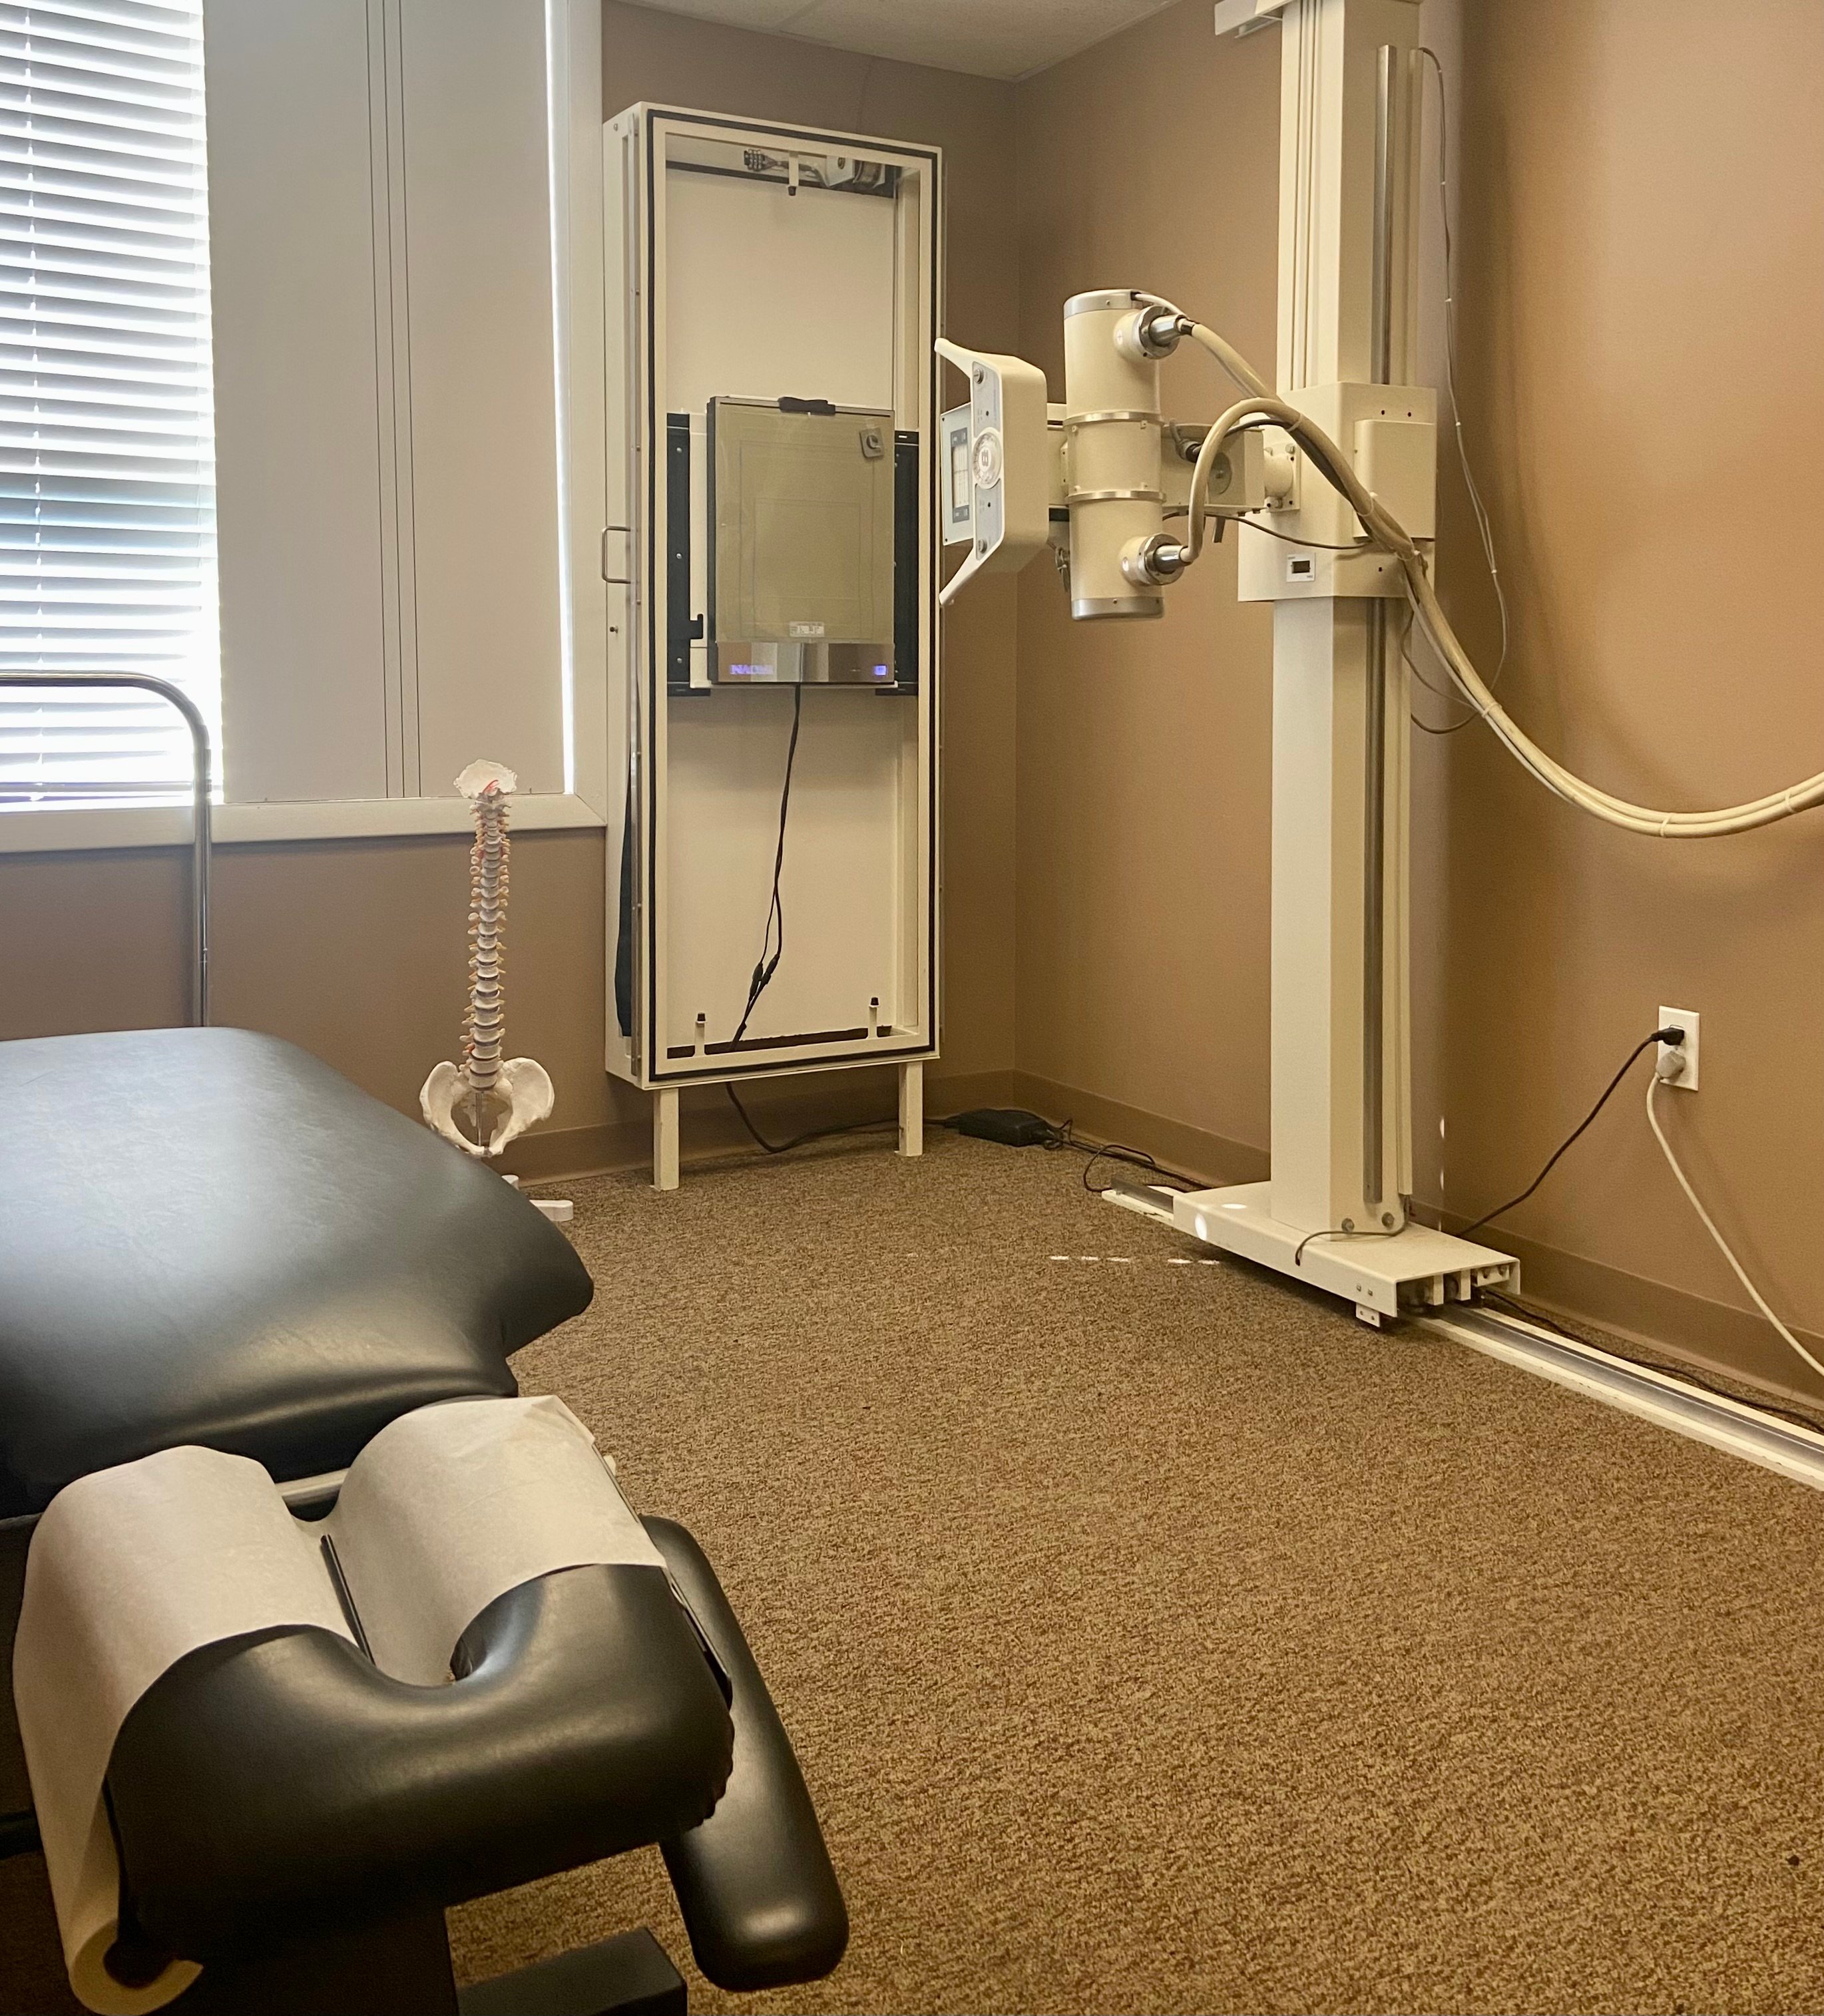 Treatment Room with Xray